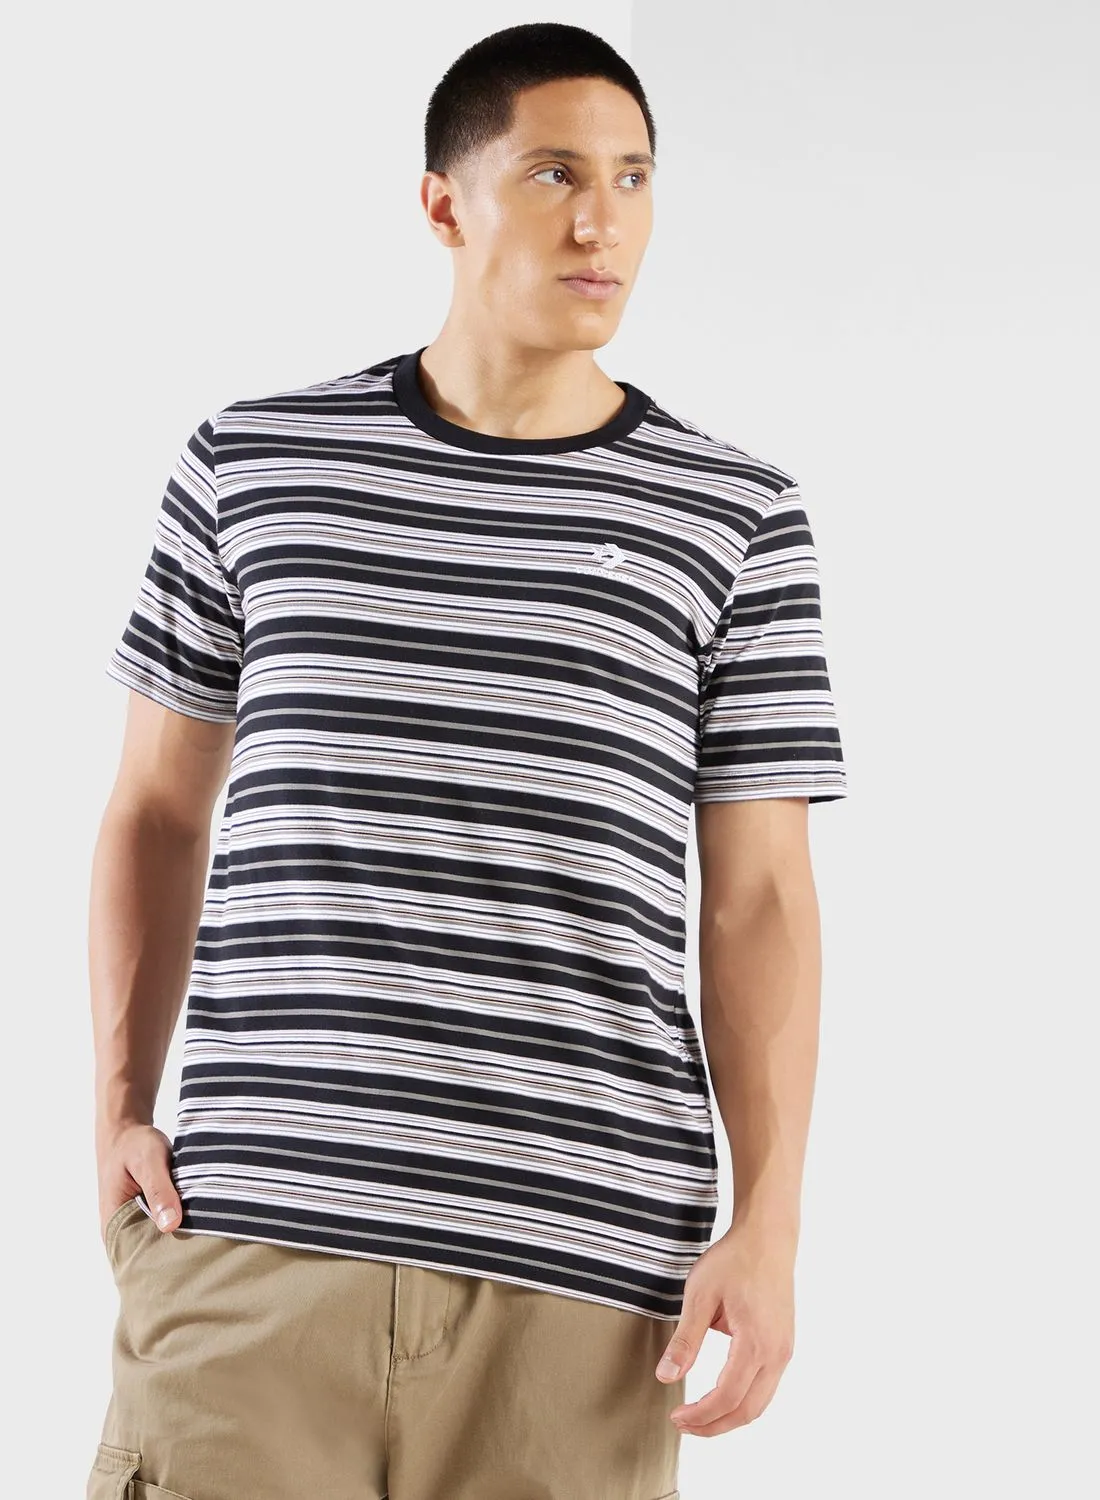 CONVERSE Striped T-Shirt